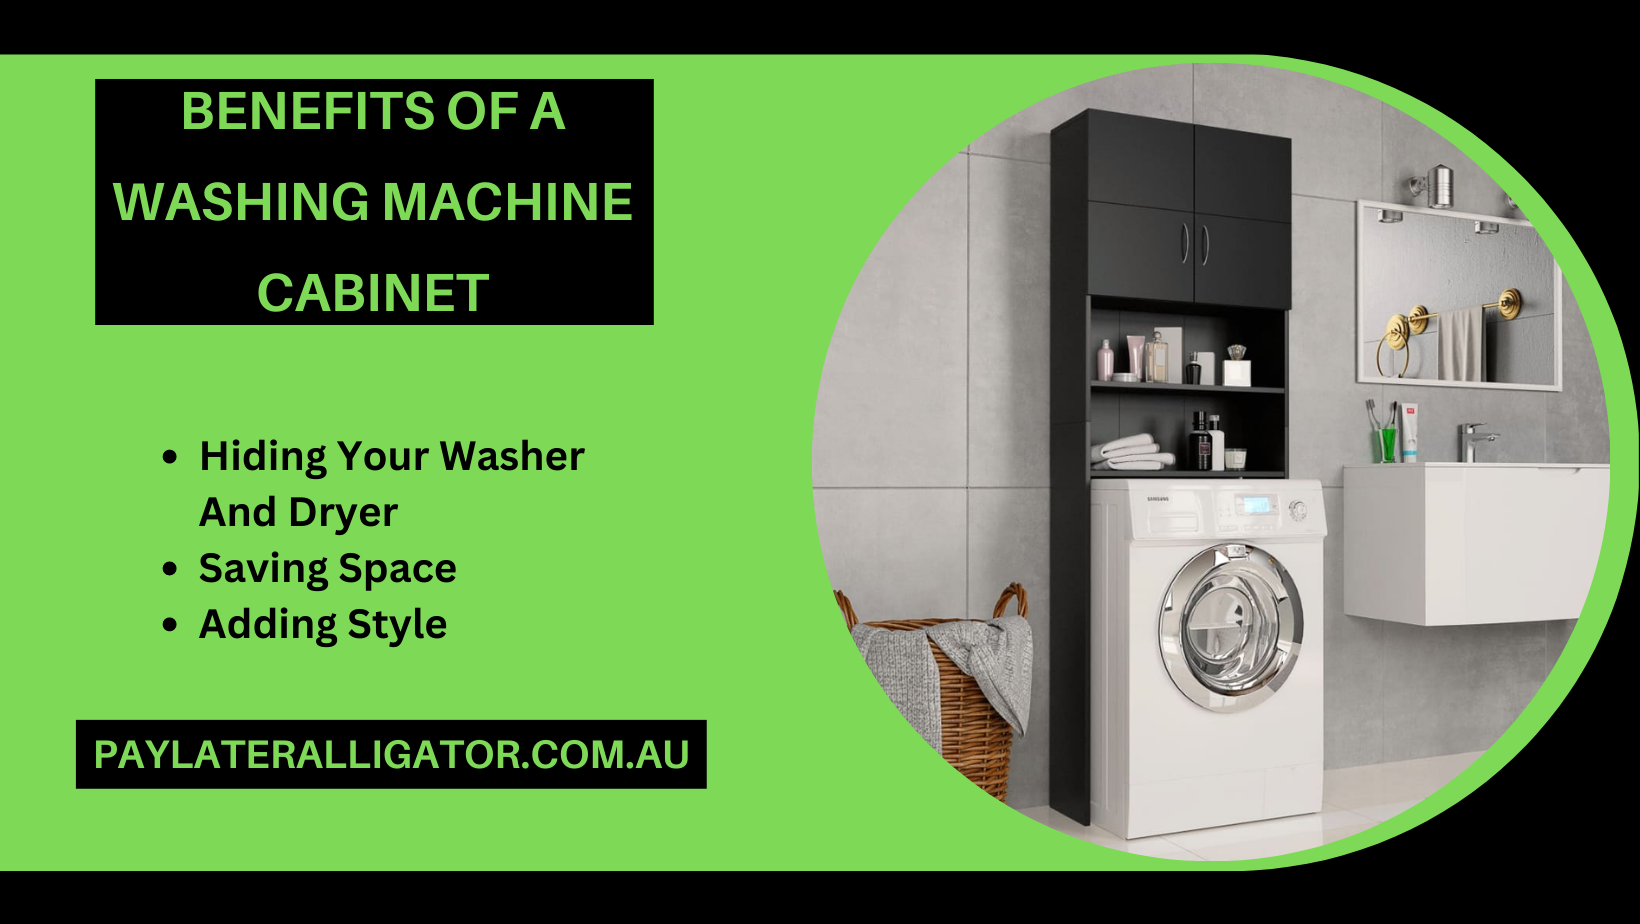 Benefits of a Washing Machine Cabinet